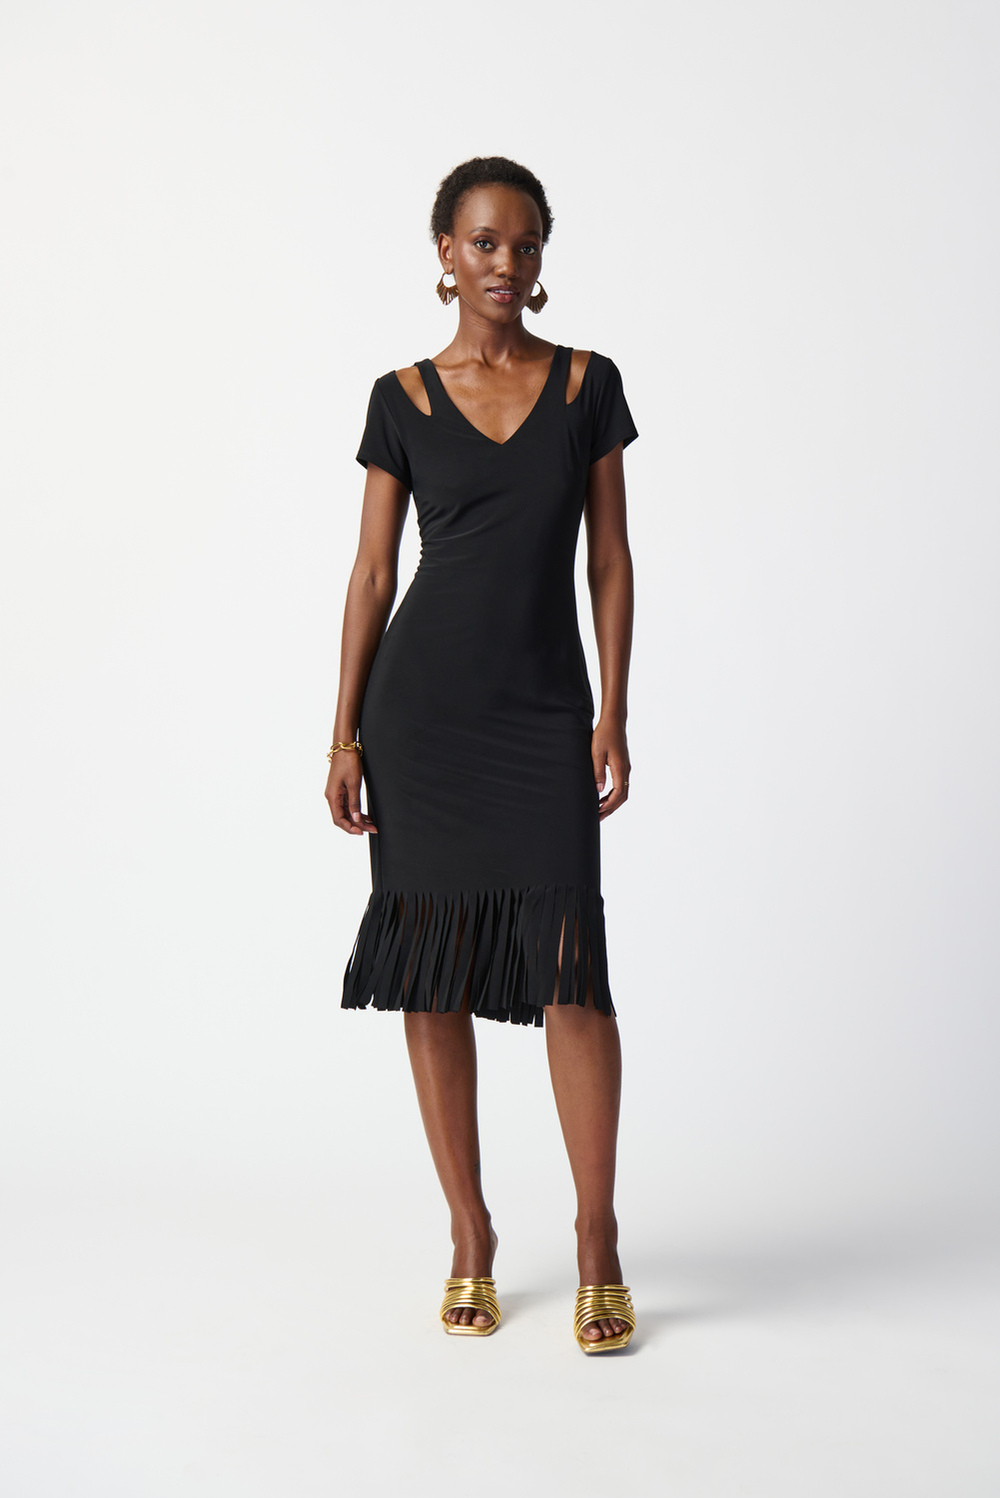 Fringe Detail Slit Dress Style 241053. Black